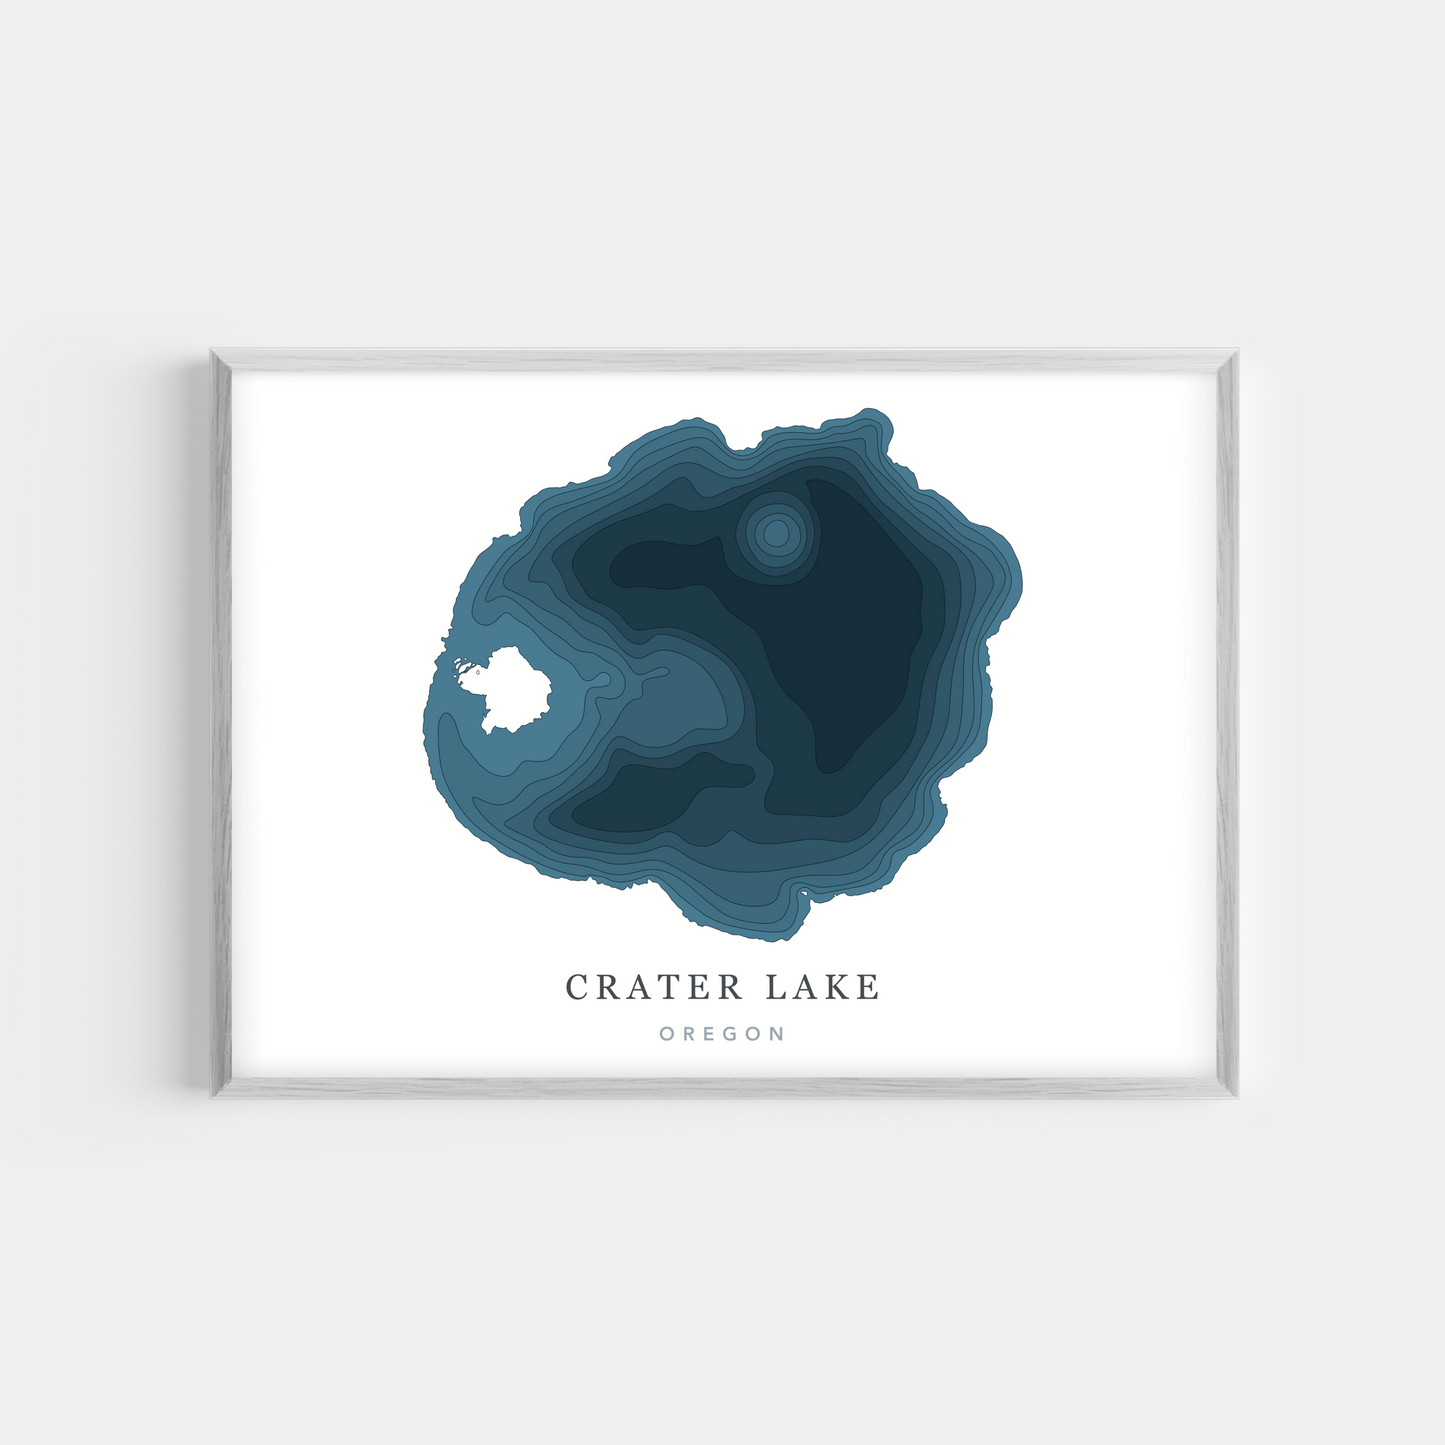 Crater Lake, Oregon | Photo Print